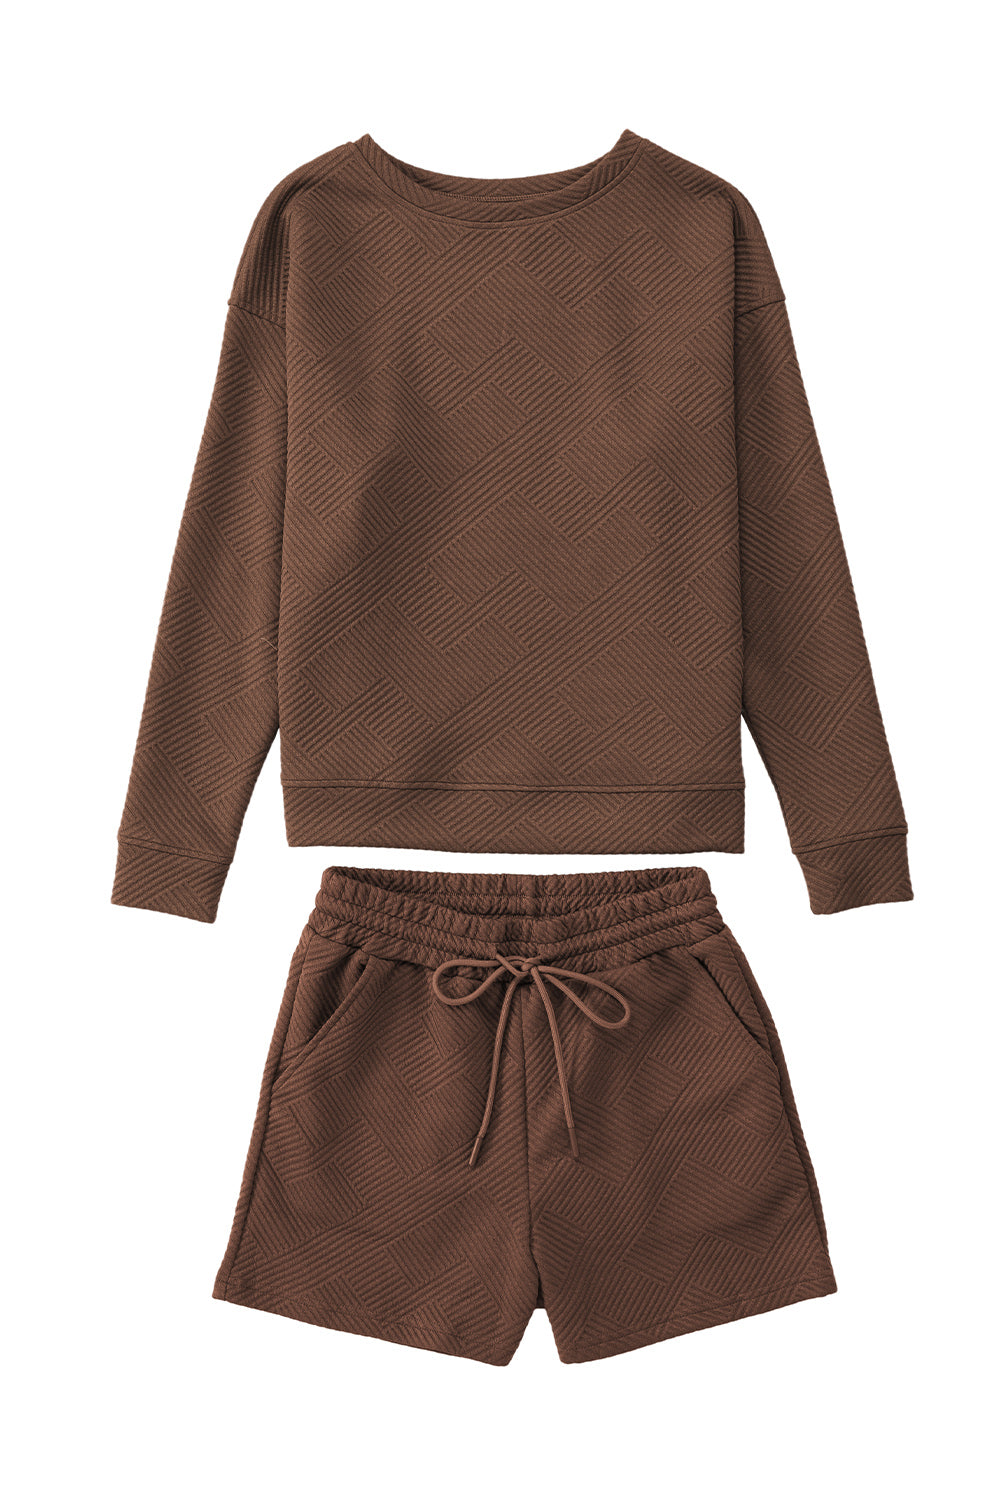 Brown Textured Long Sleeve Top and Drawstring Shorts Set